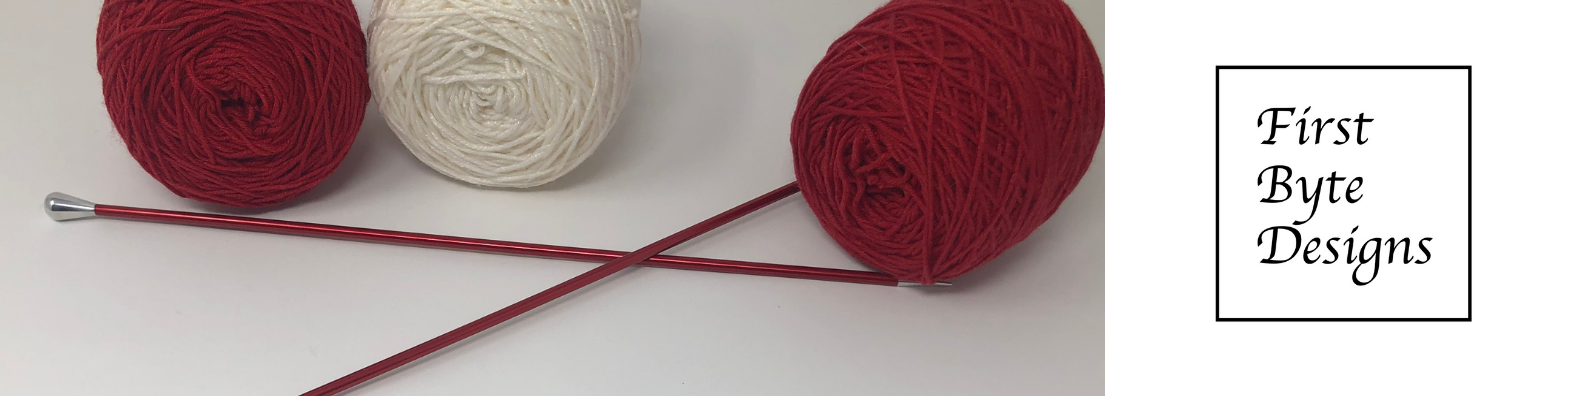 red yarn needles